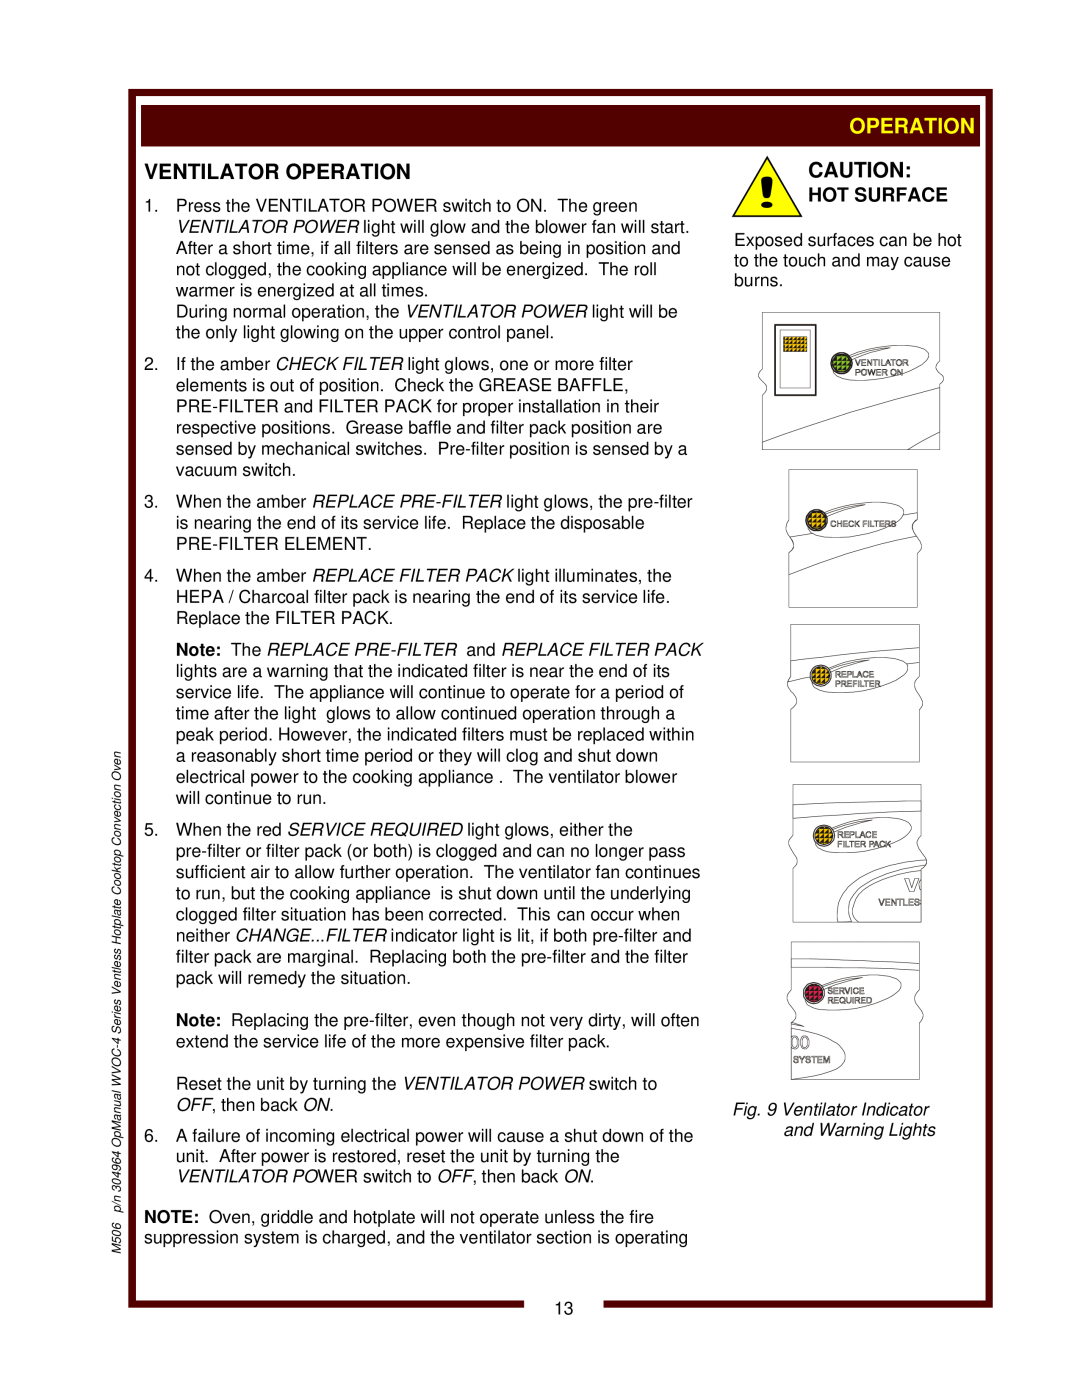 Wells WVOC-4HS operation manual Ventilator Operation, Hot Surface, Ventilator Indicator and Warning Lights 